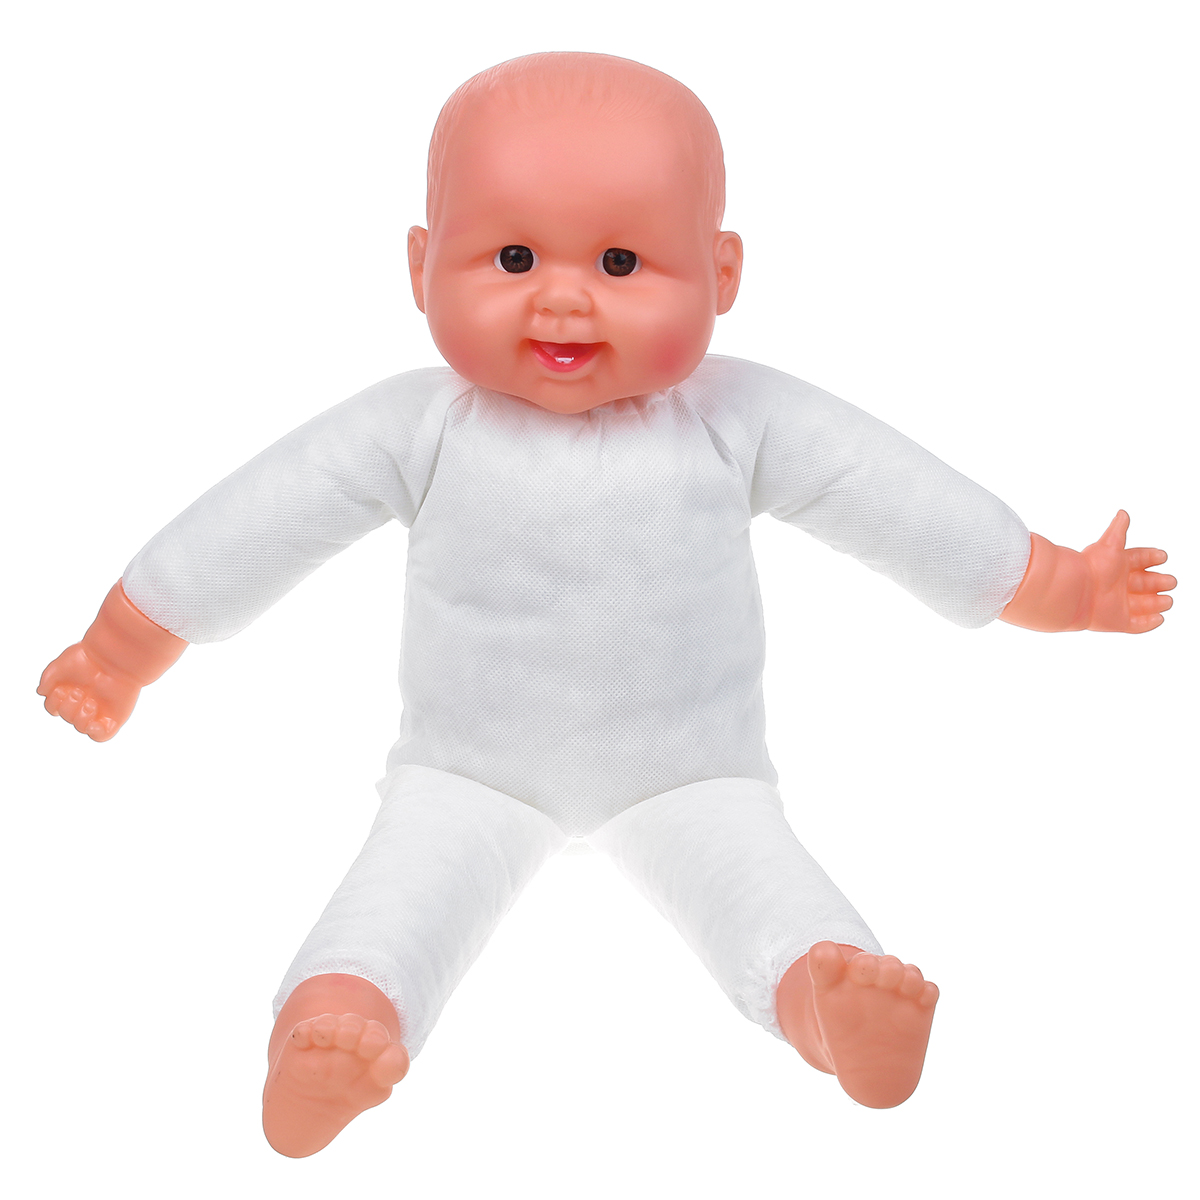 50CM-Multi-color-Simulation-Silicone-Vinyl-Lifelike-Realistic-Reborn-Newborn-Baby-Doll-Toy-with-Clot-1815387-7